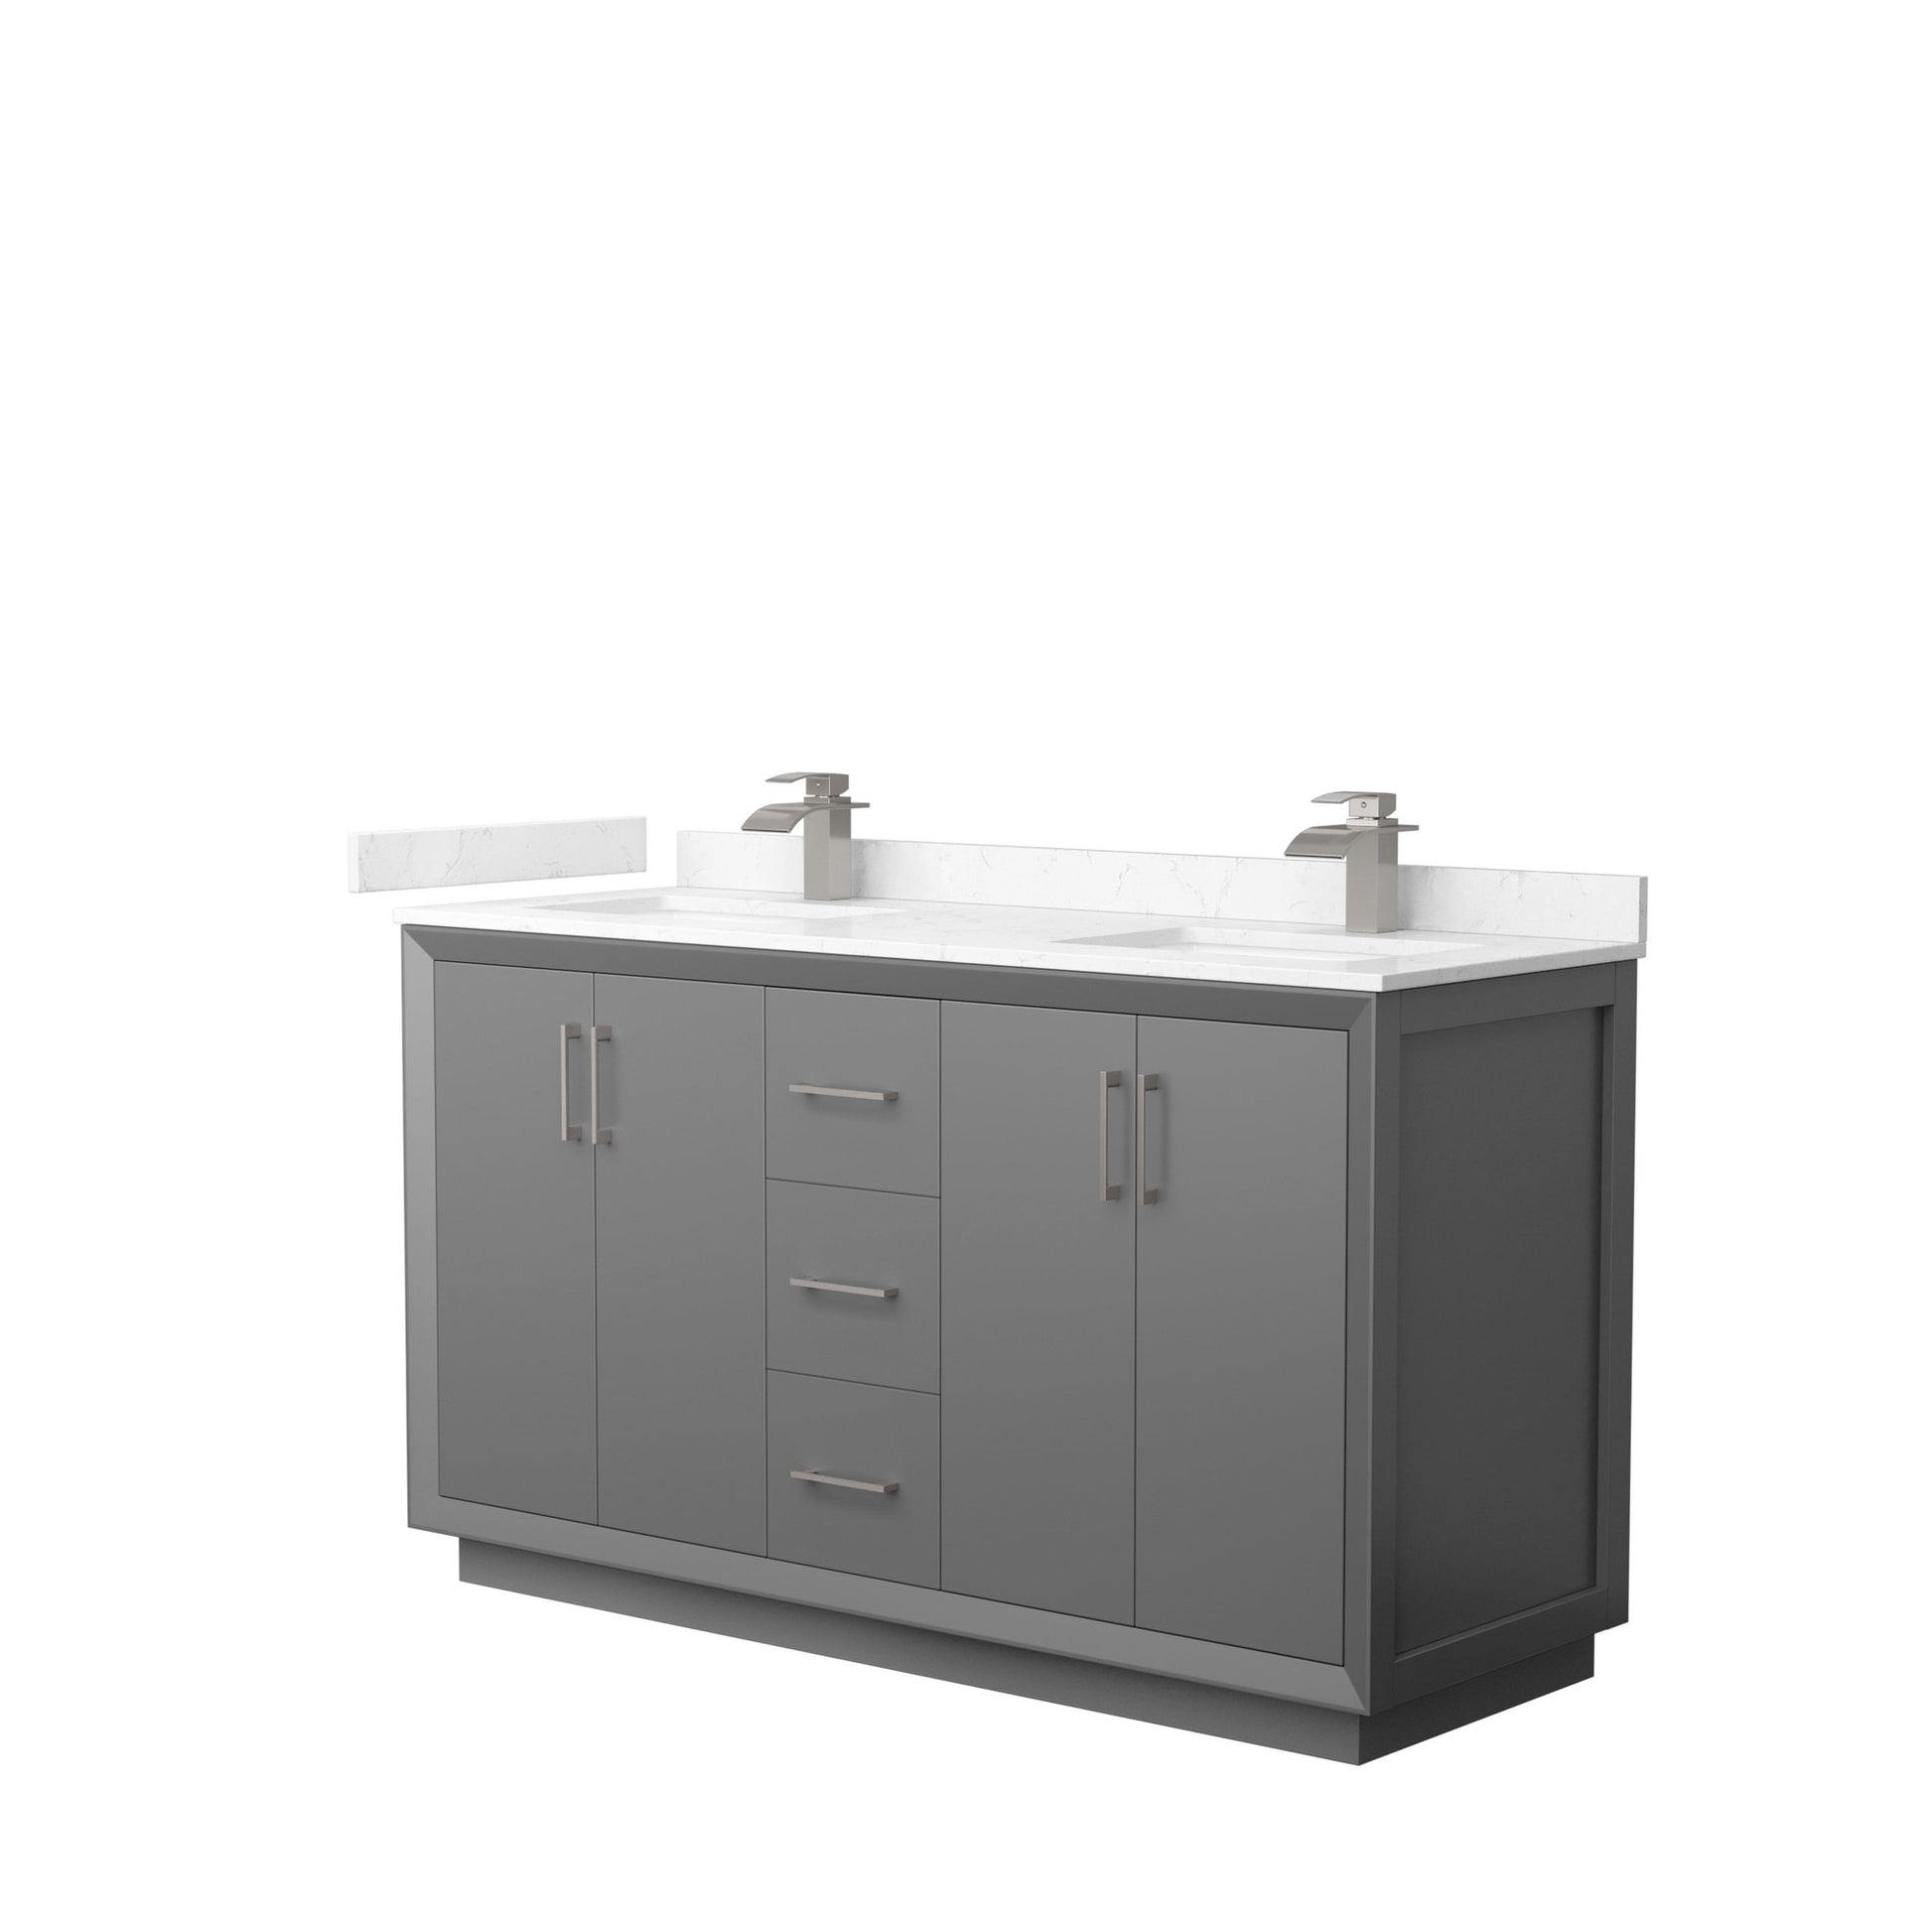 Wyndham Collection Strada 60" Double Bathroom Vanity in Dark Gray, Carrara Cultured Marble Countertop, Undermount Square Sink, Brushed Nickel Trim